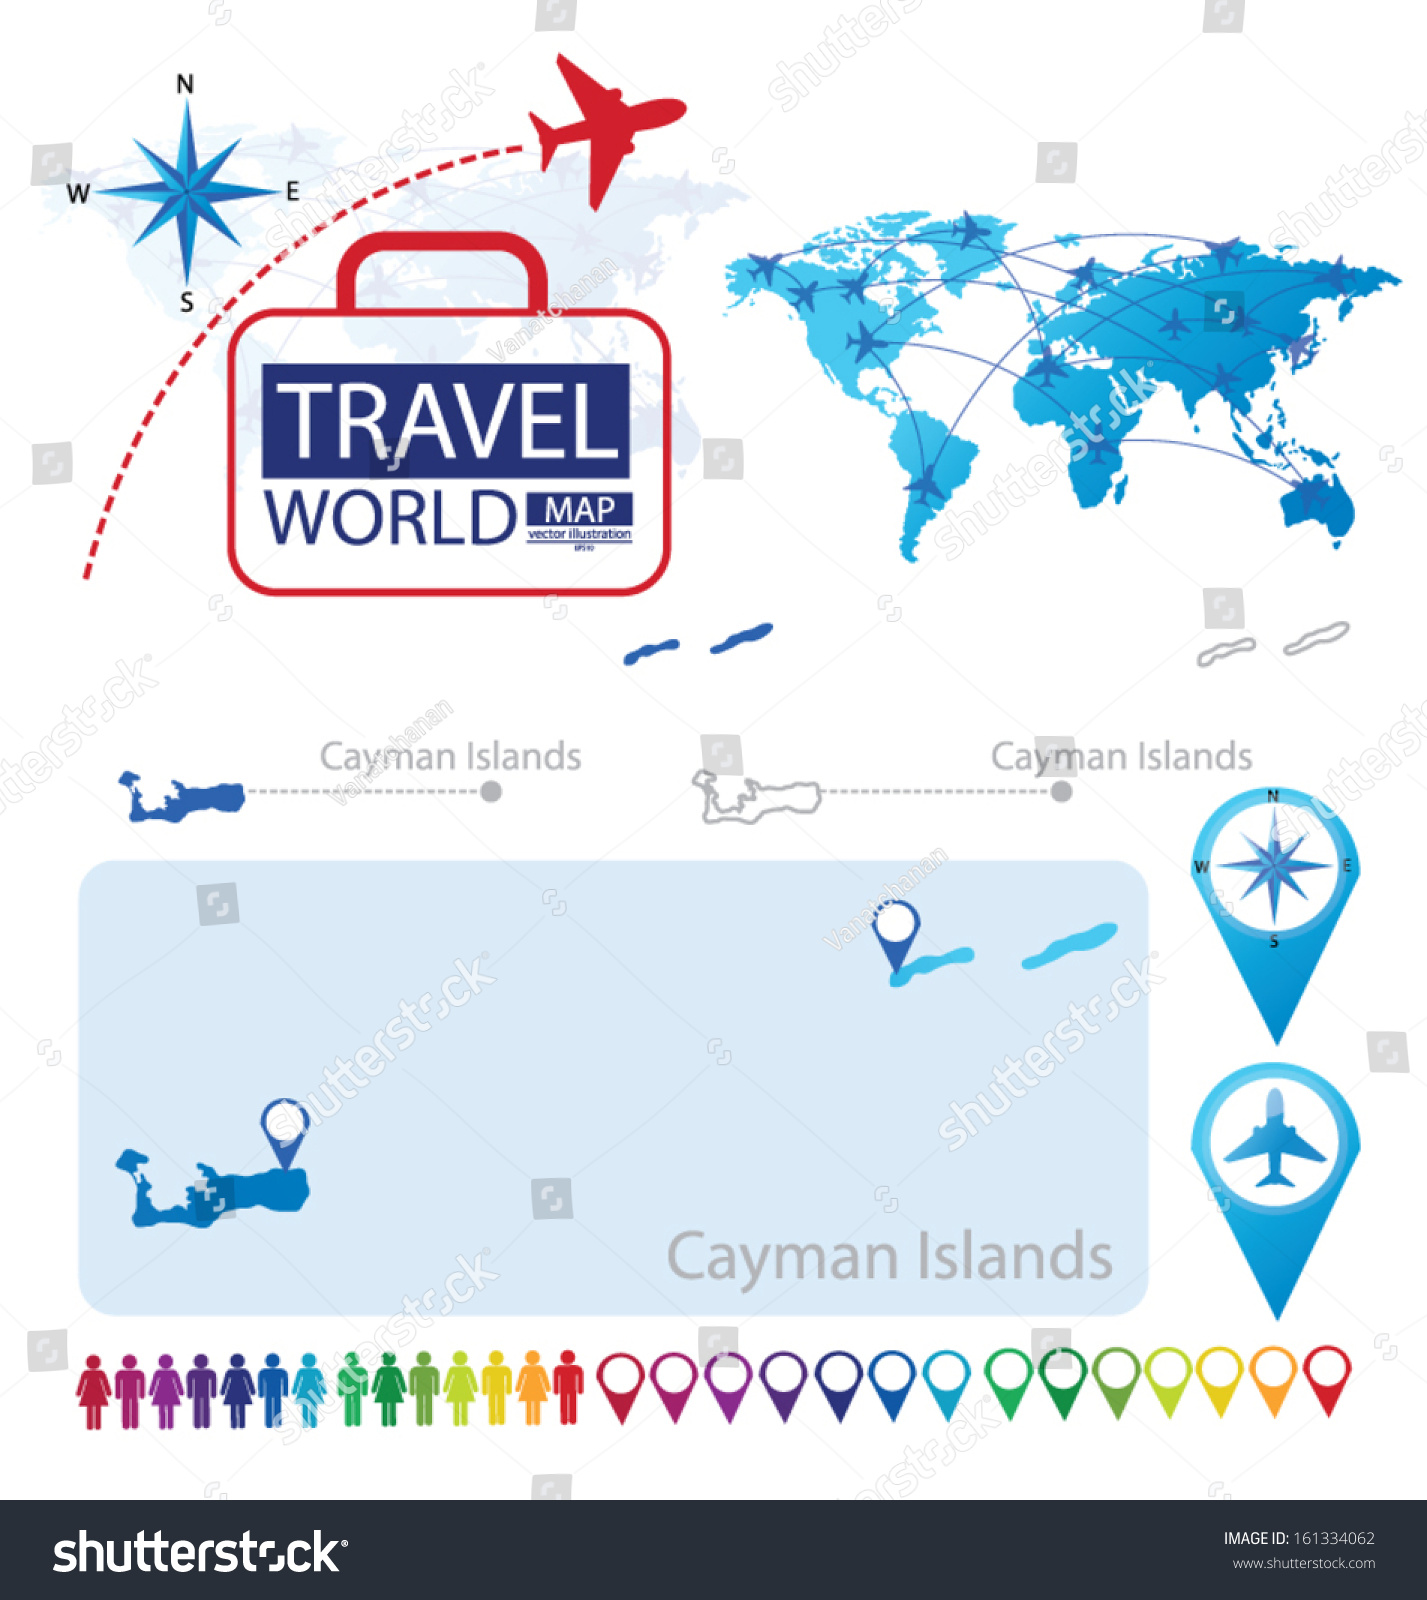 Cayman Islands World Map Travel Vector Stock Vector Royalty Free